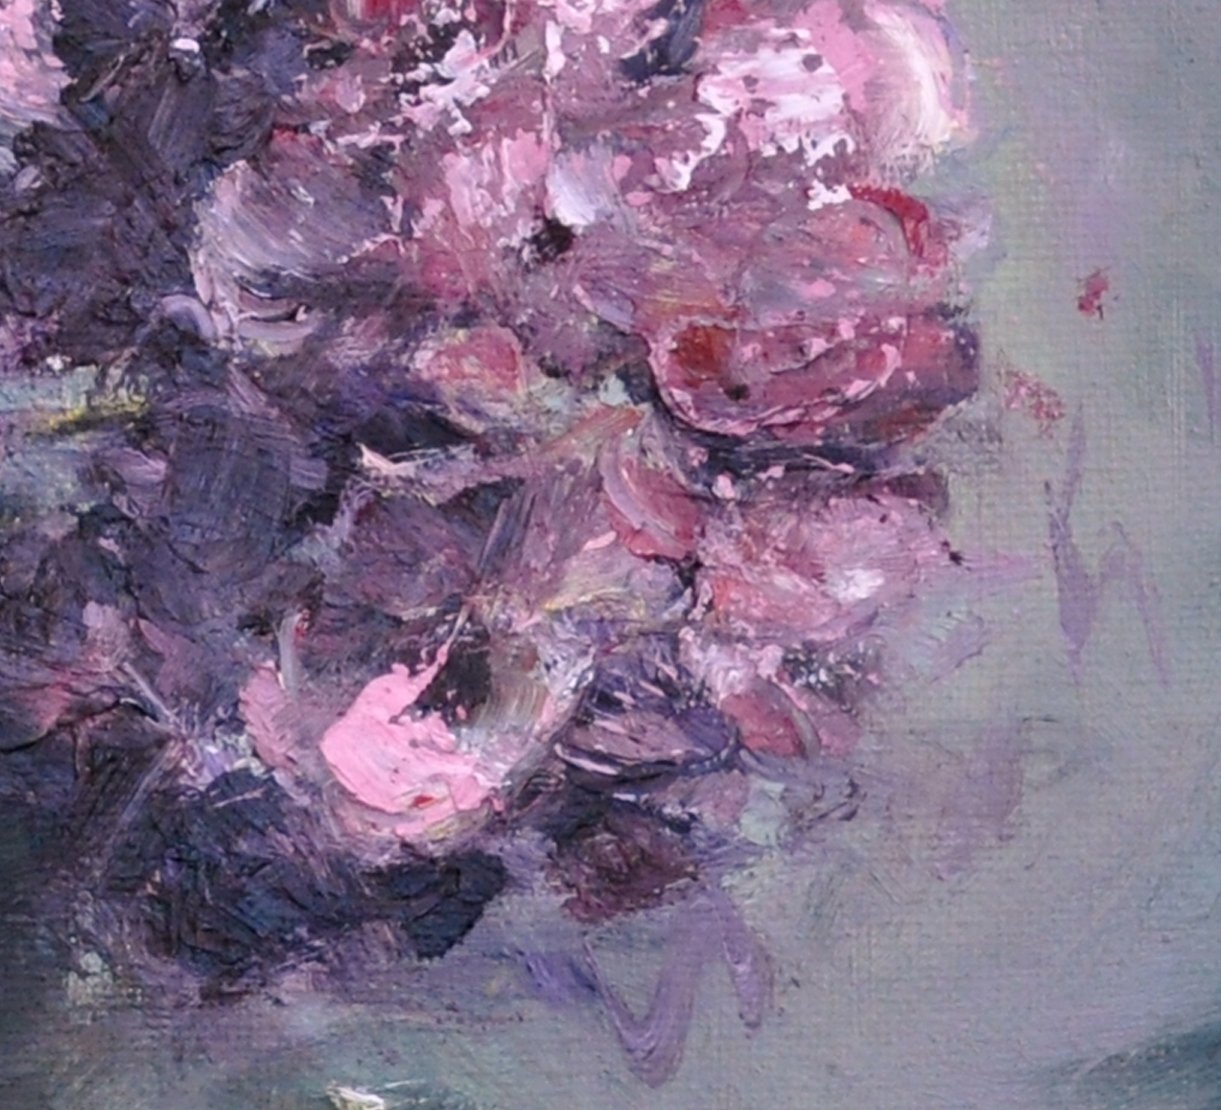 purplehydrangea-closeup8.jpg